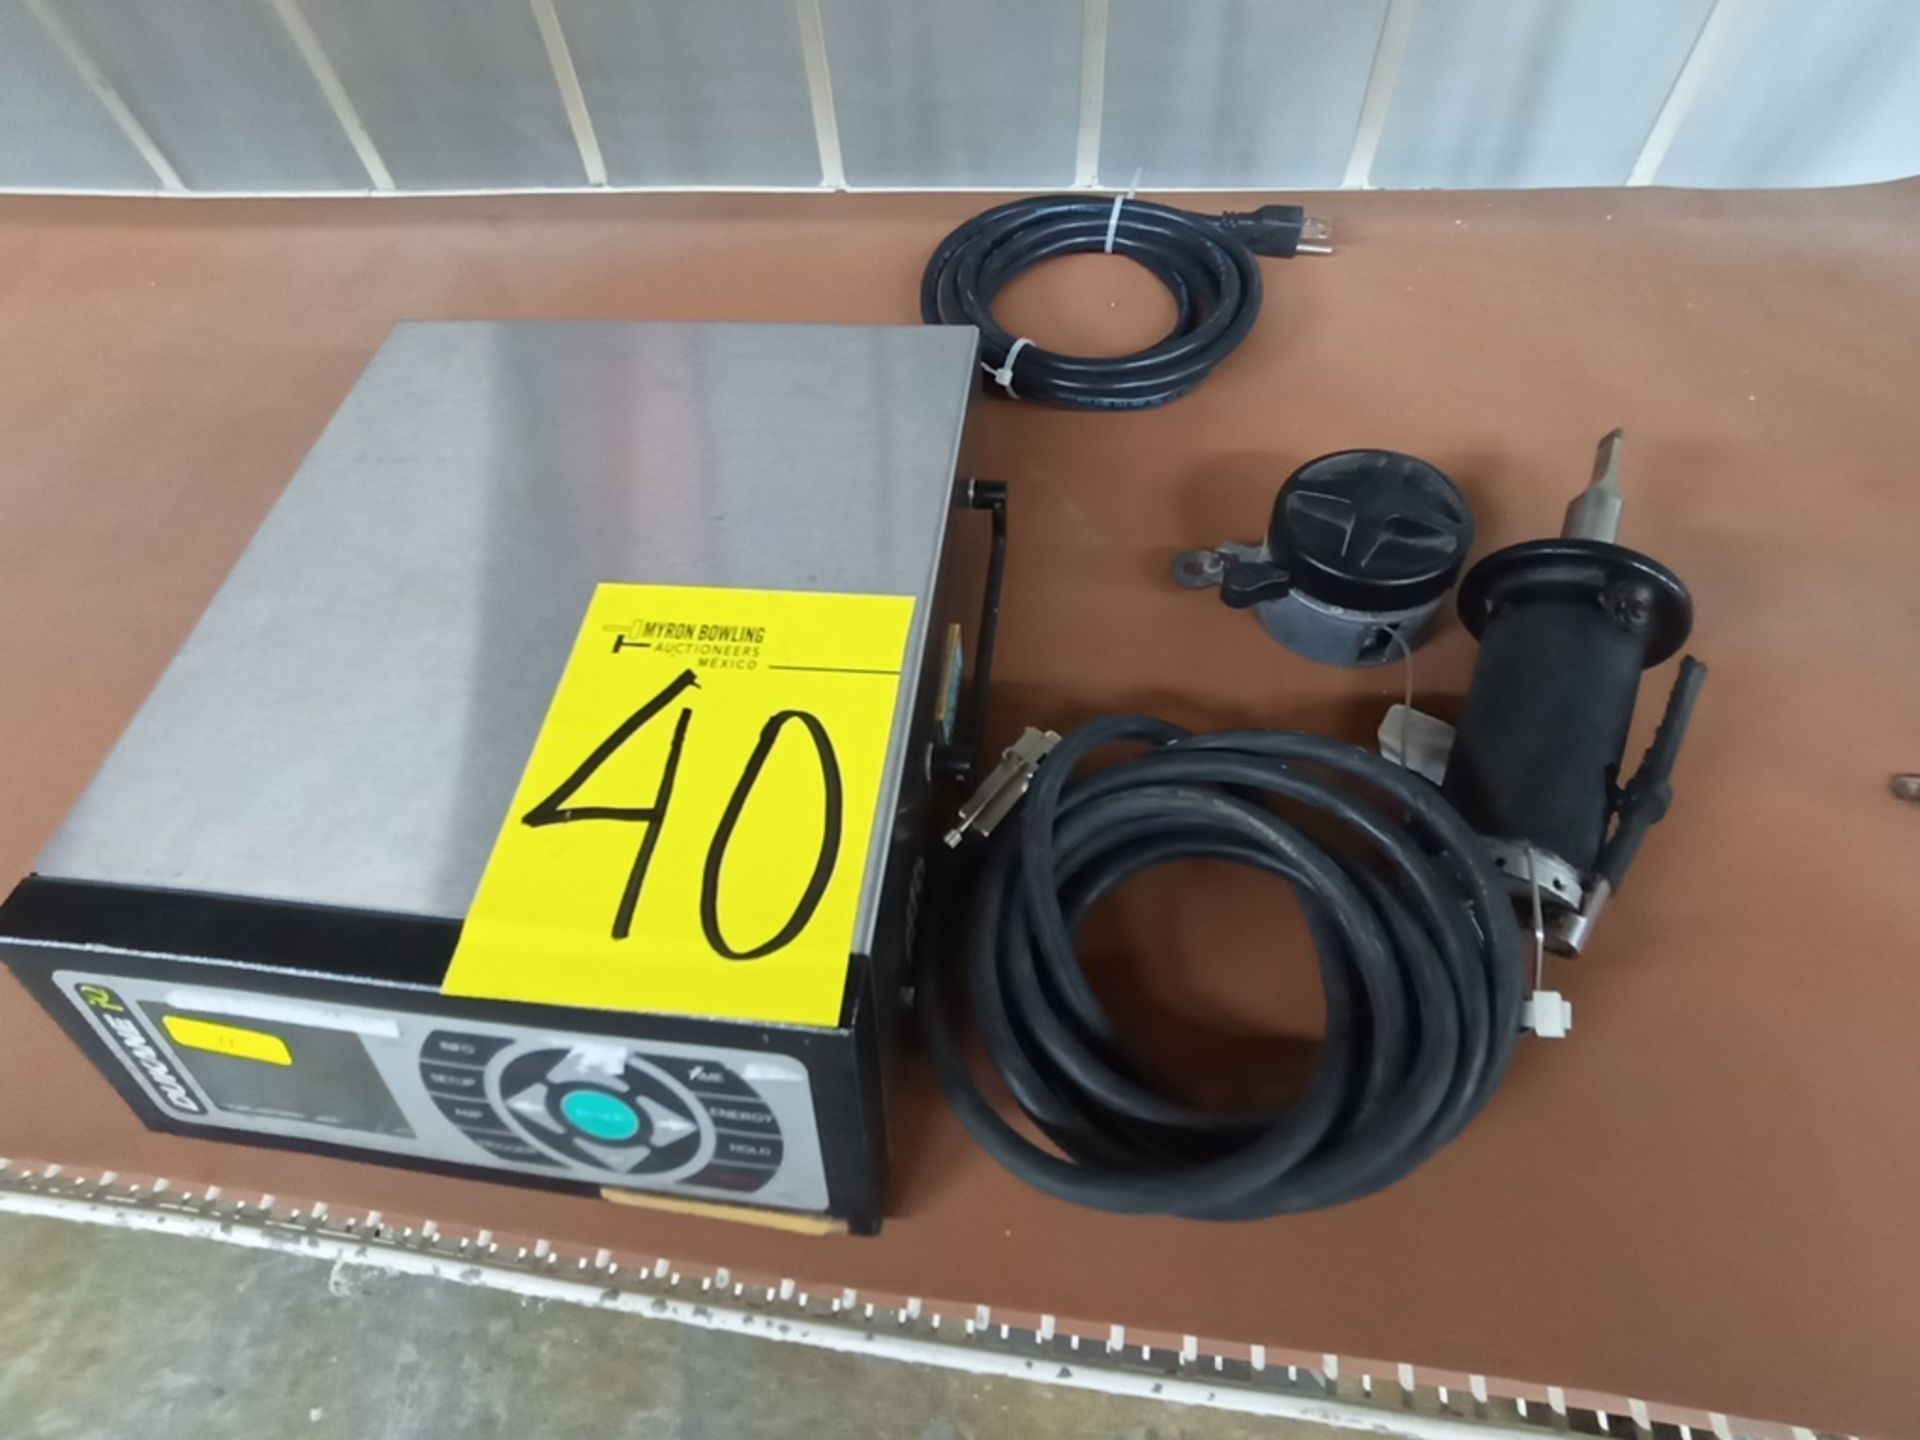 Ultrasonic Portable Welding System Series iQ Model iQ EZ Serial No 326823 110V/60Hz - Image 5 of 10